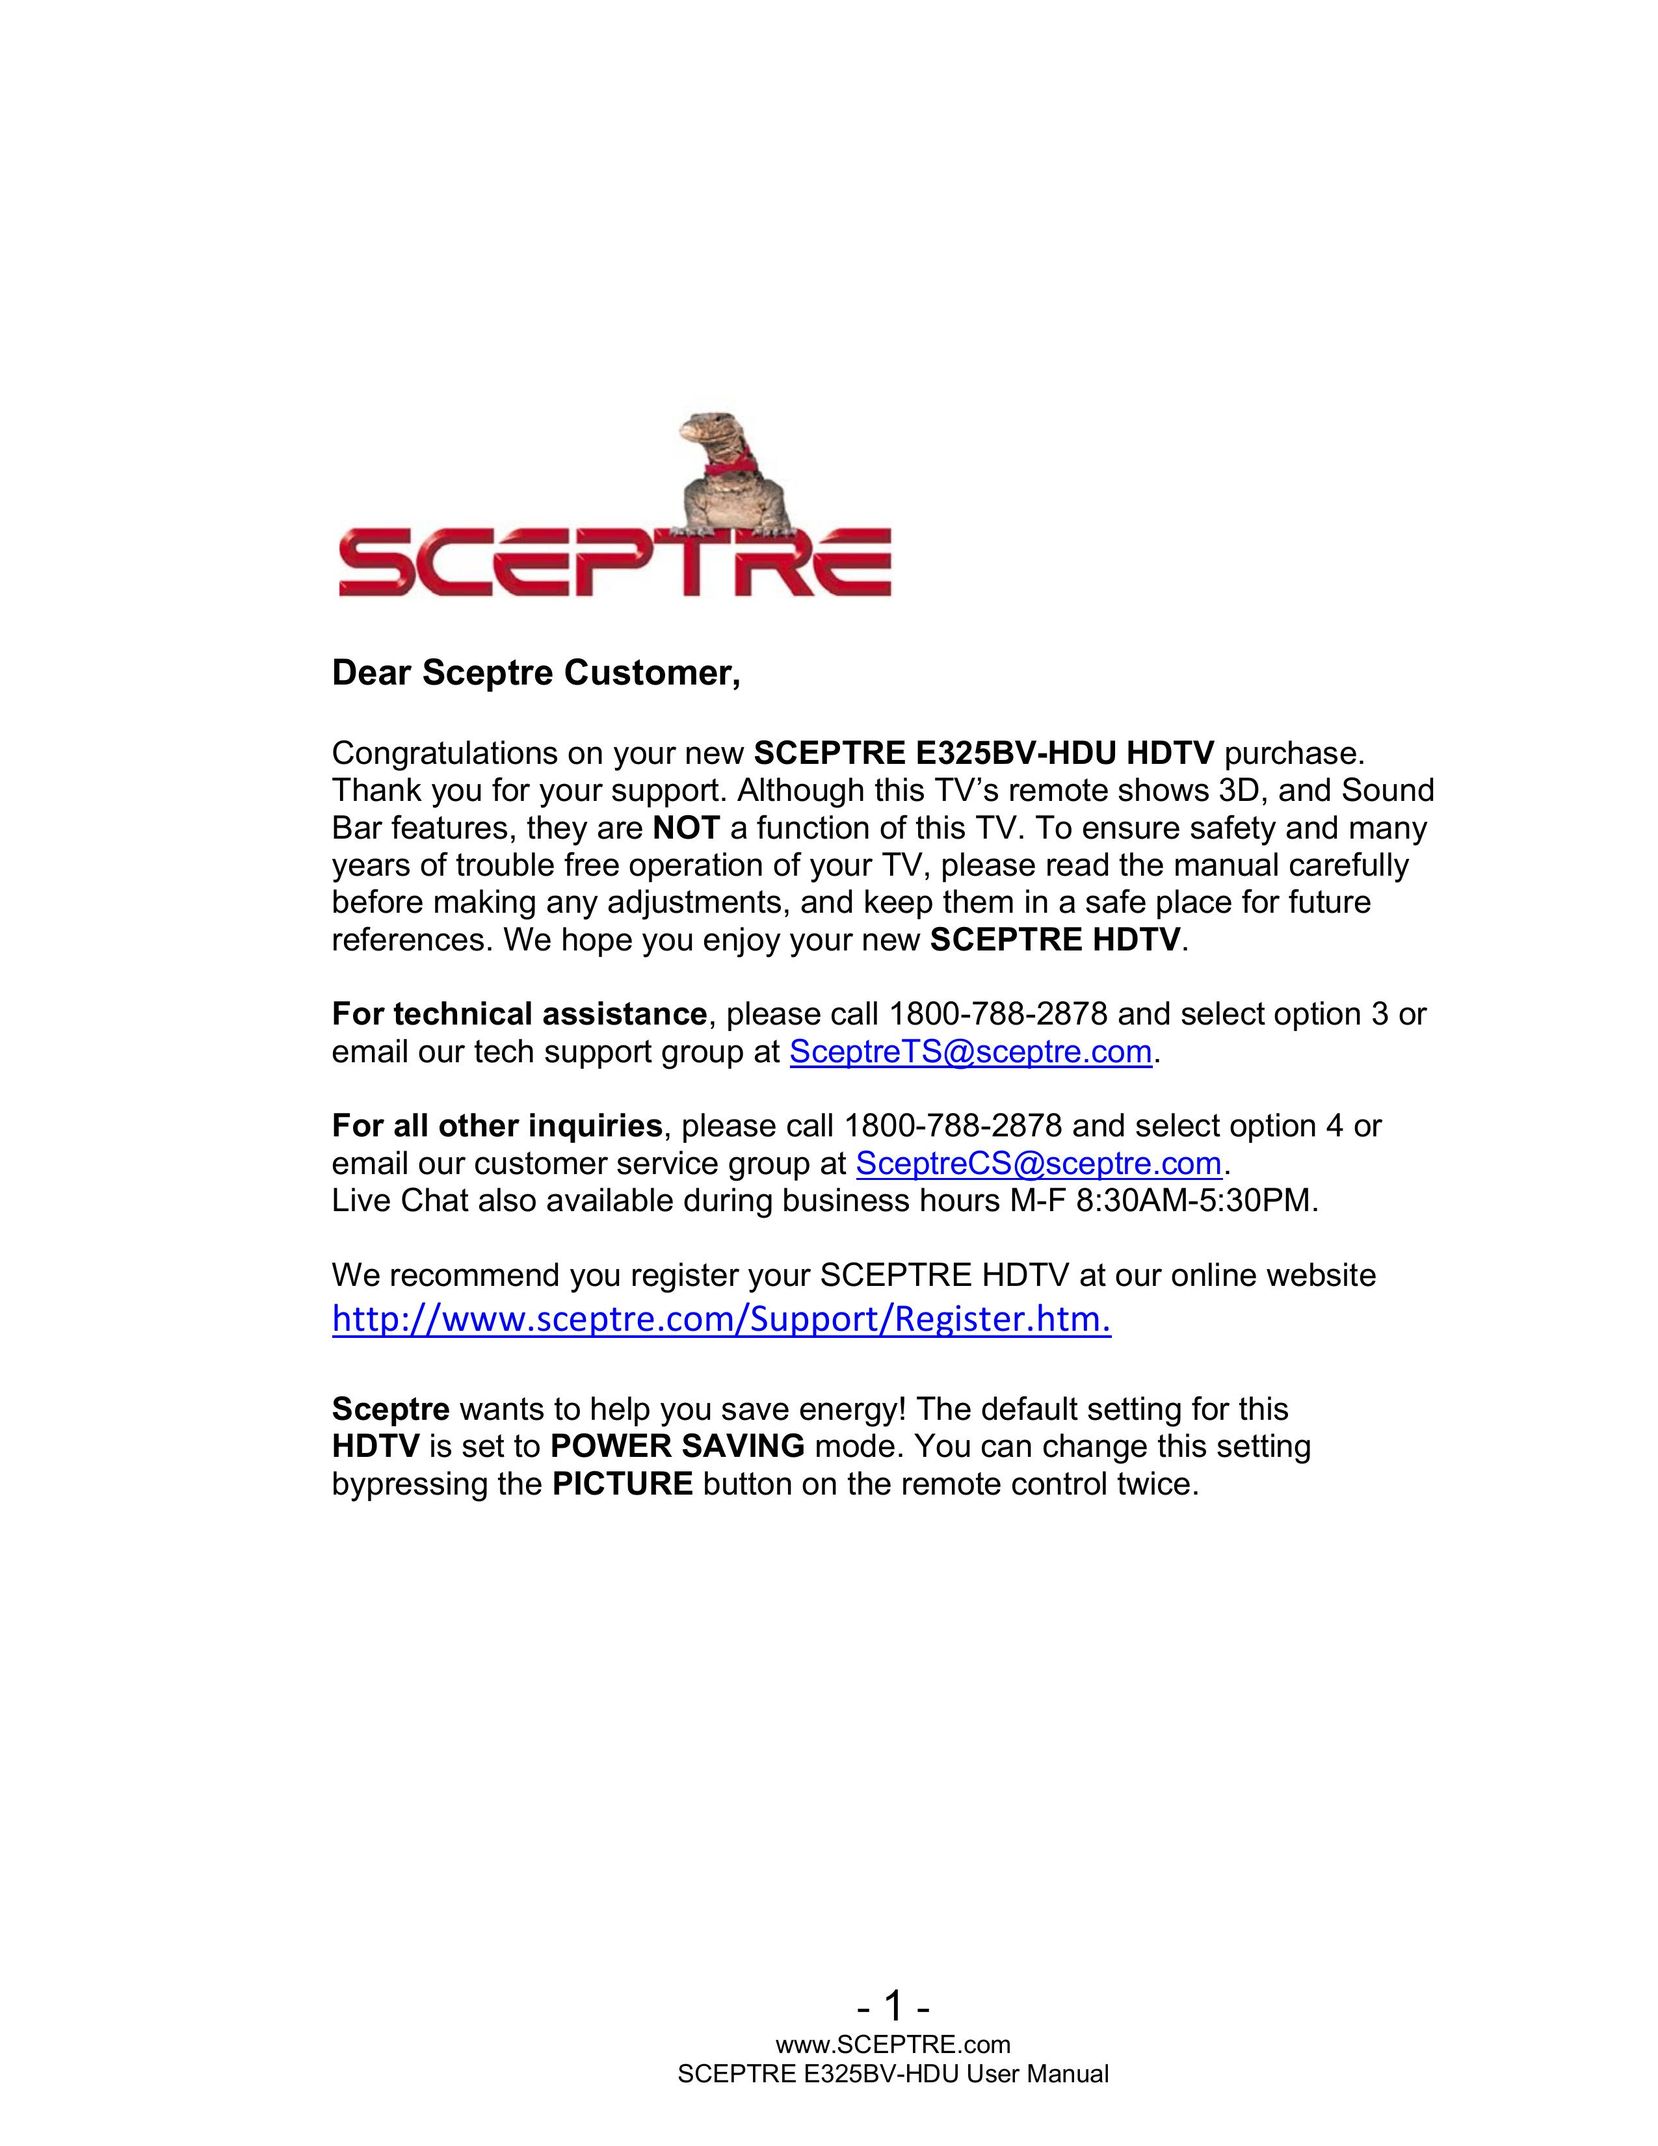 Sceptre Technologies E325BV-HDU Flat Panel Television User Manual